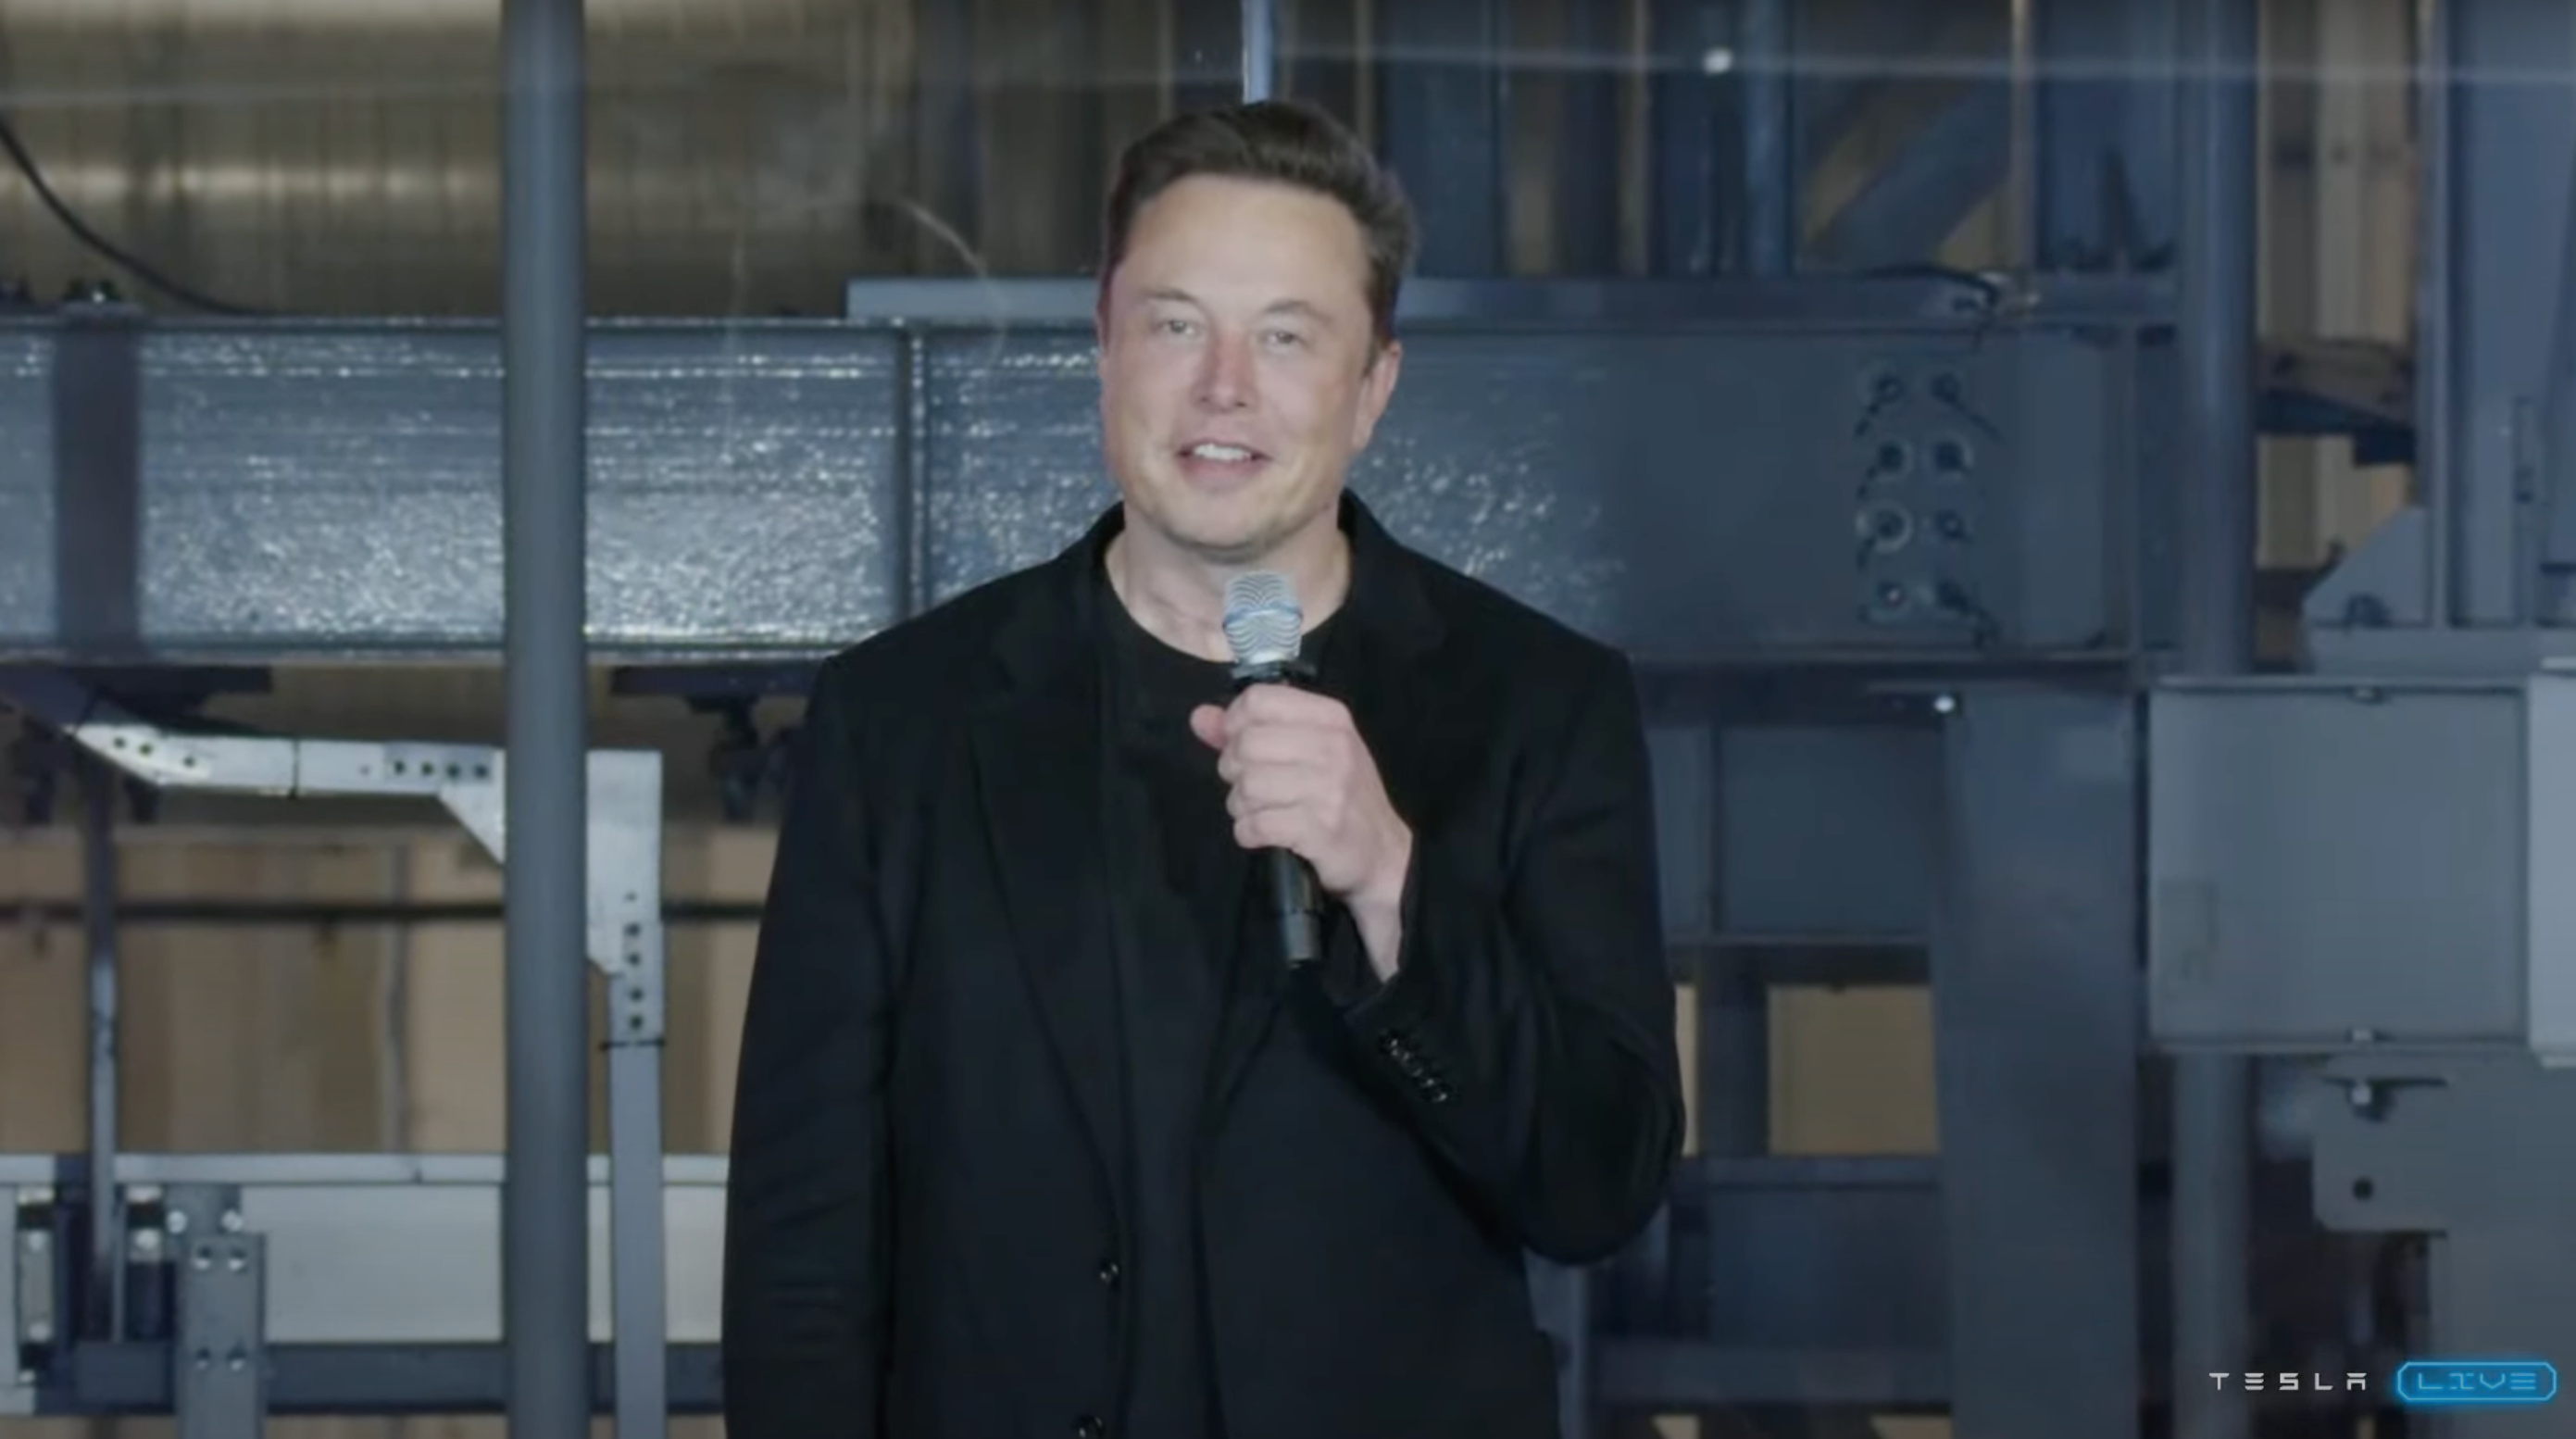 Tesla Shareholders Approve 3-For-1 Stock Split — Elon Musk Shares Cybertruck Update, Teases New Factory